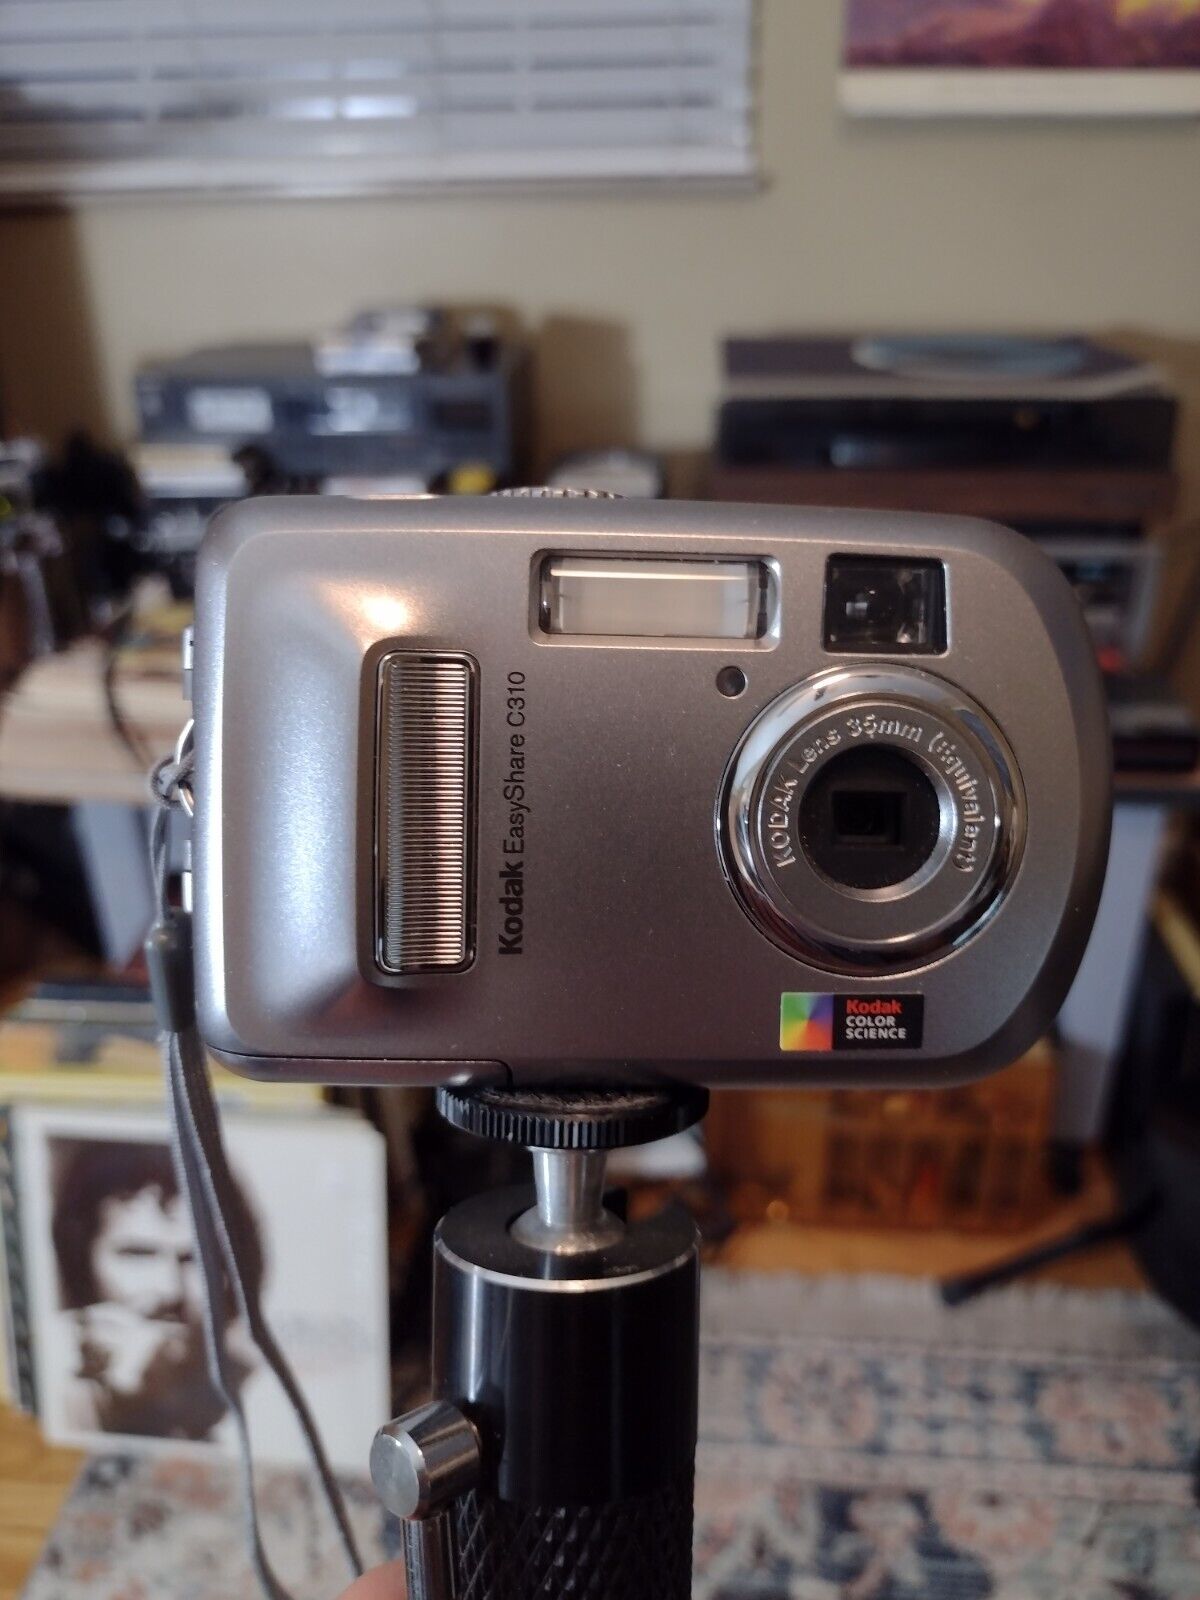 Kodak EasyShare Digital Camera with Printer Doc Series 3